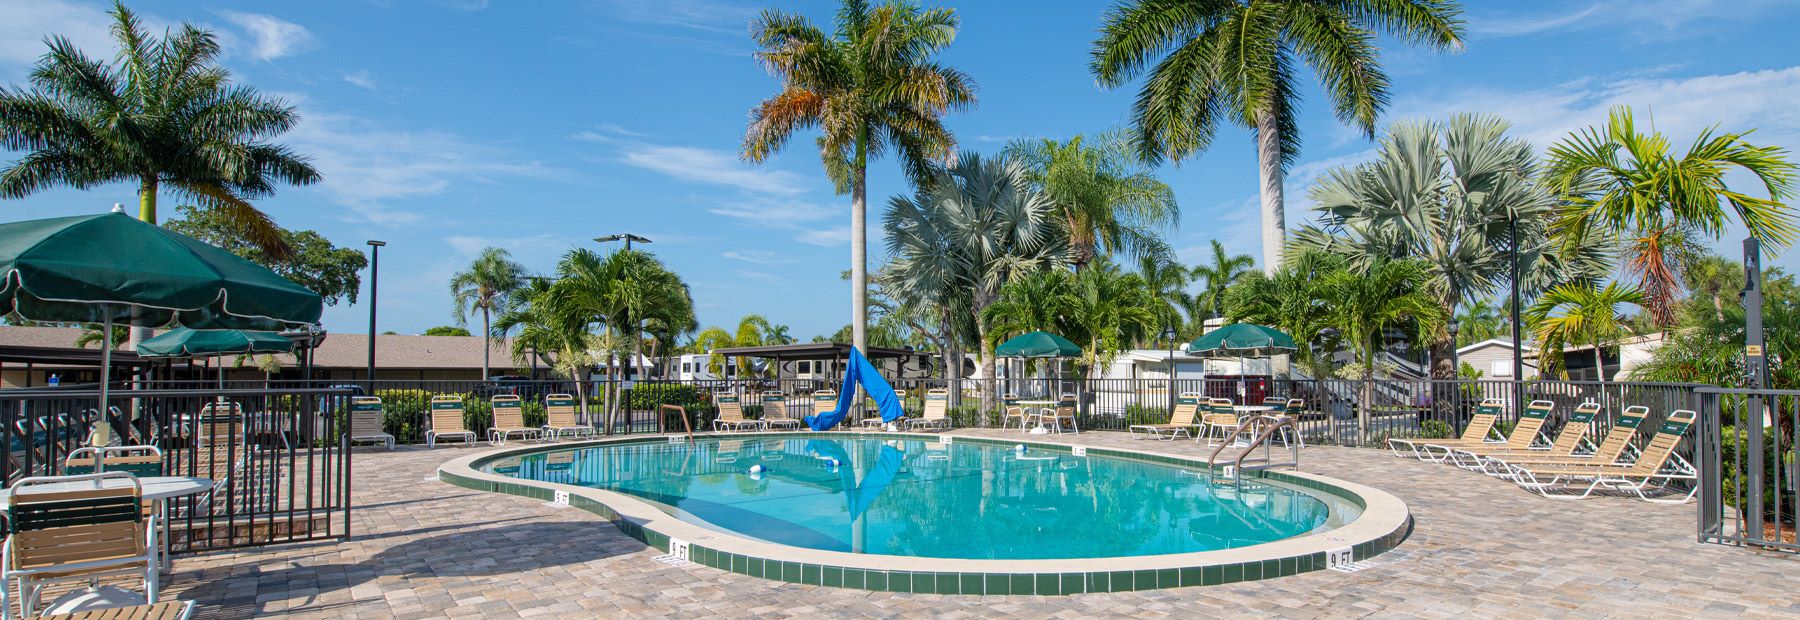 Sun Retreats Fort Myers Beach Amenities FT. Myers, Florida